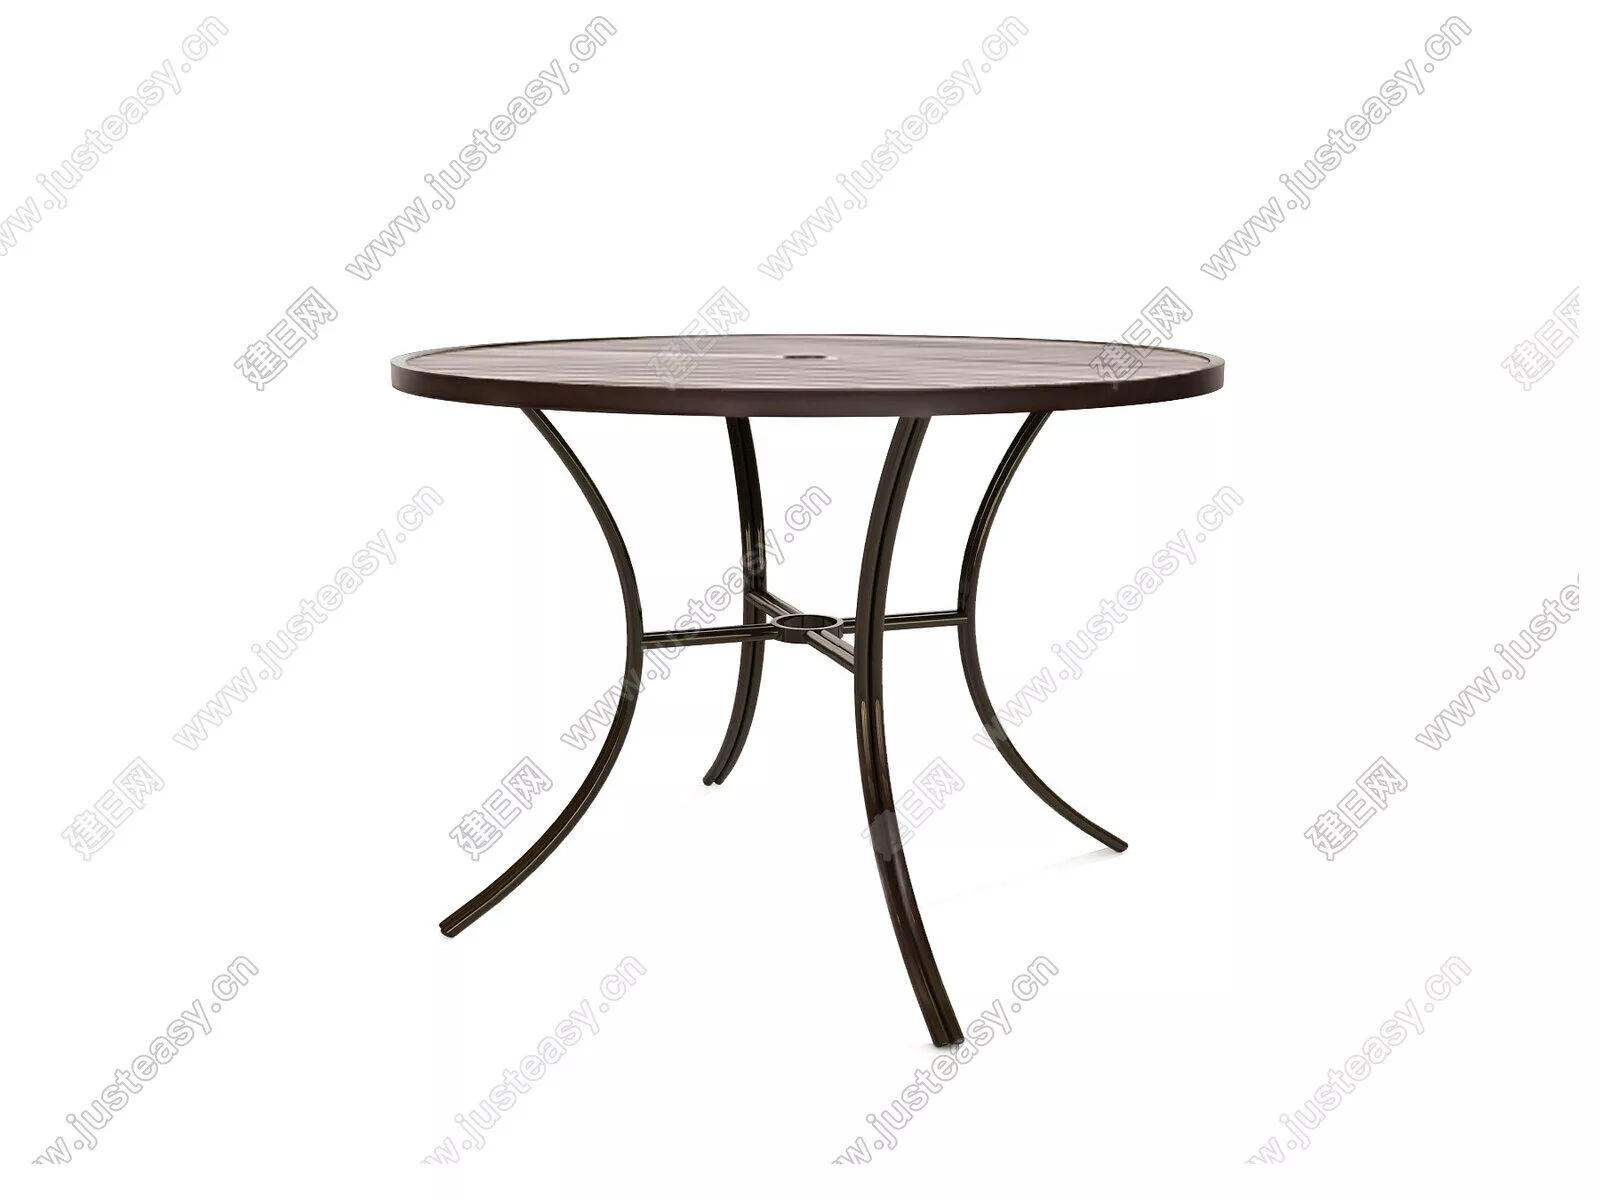 AMERICAN SIDE TABLE - SKETCHUP 3D MODEL - ENSCAPE - 111562094